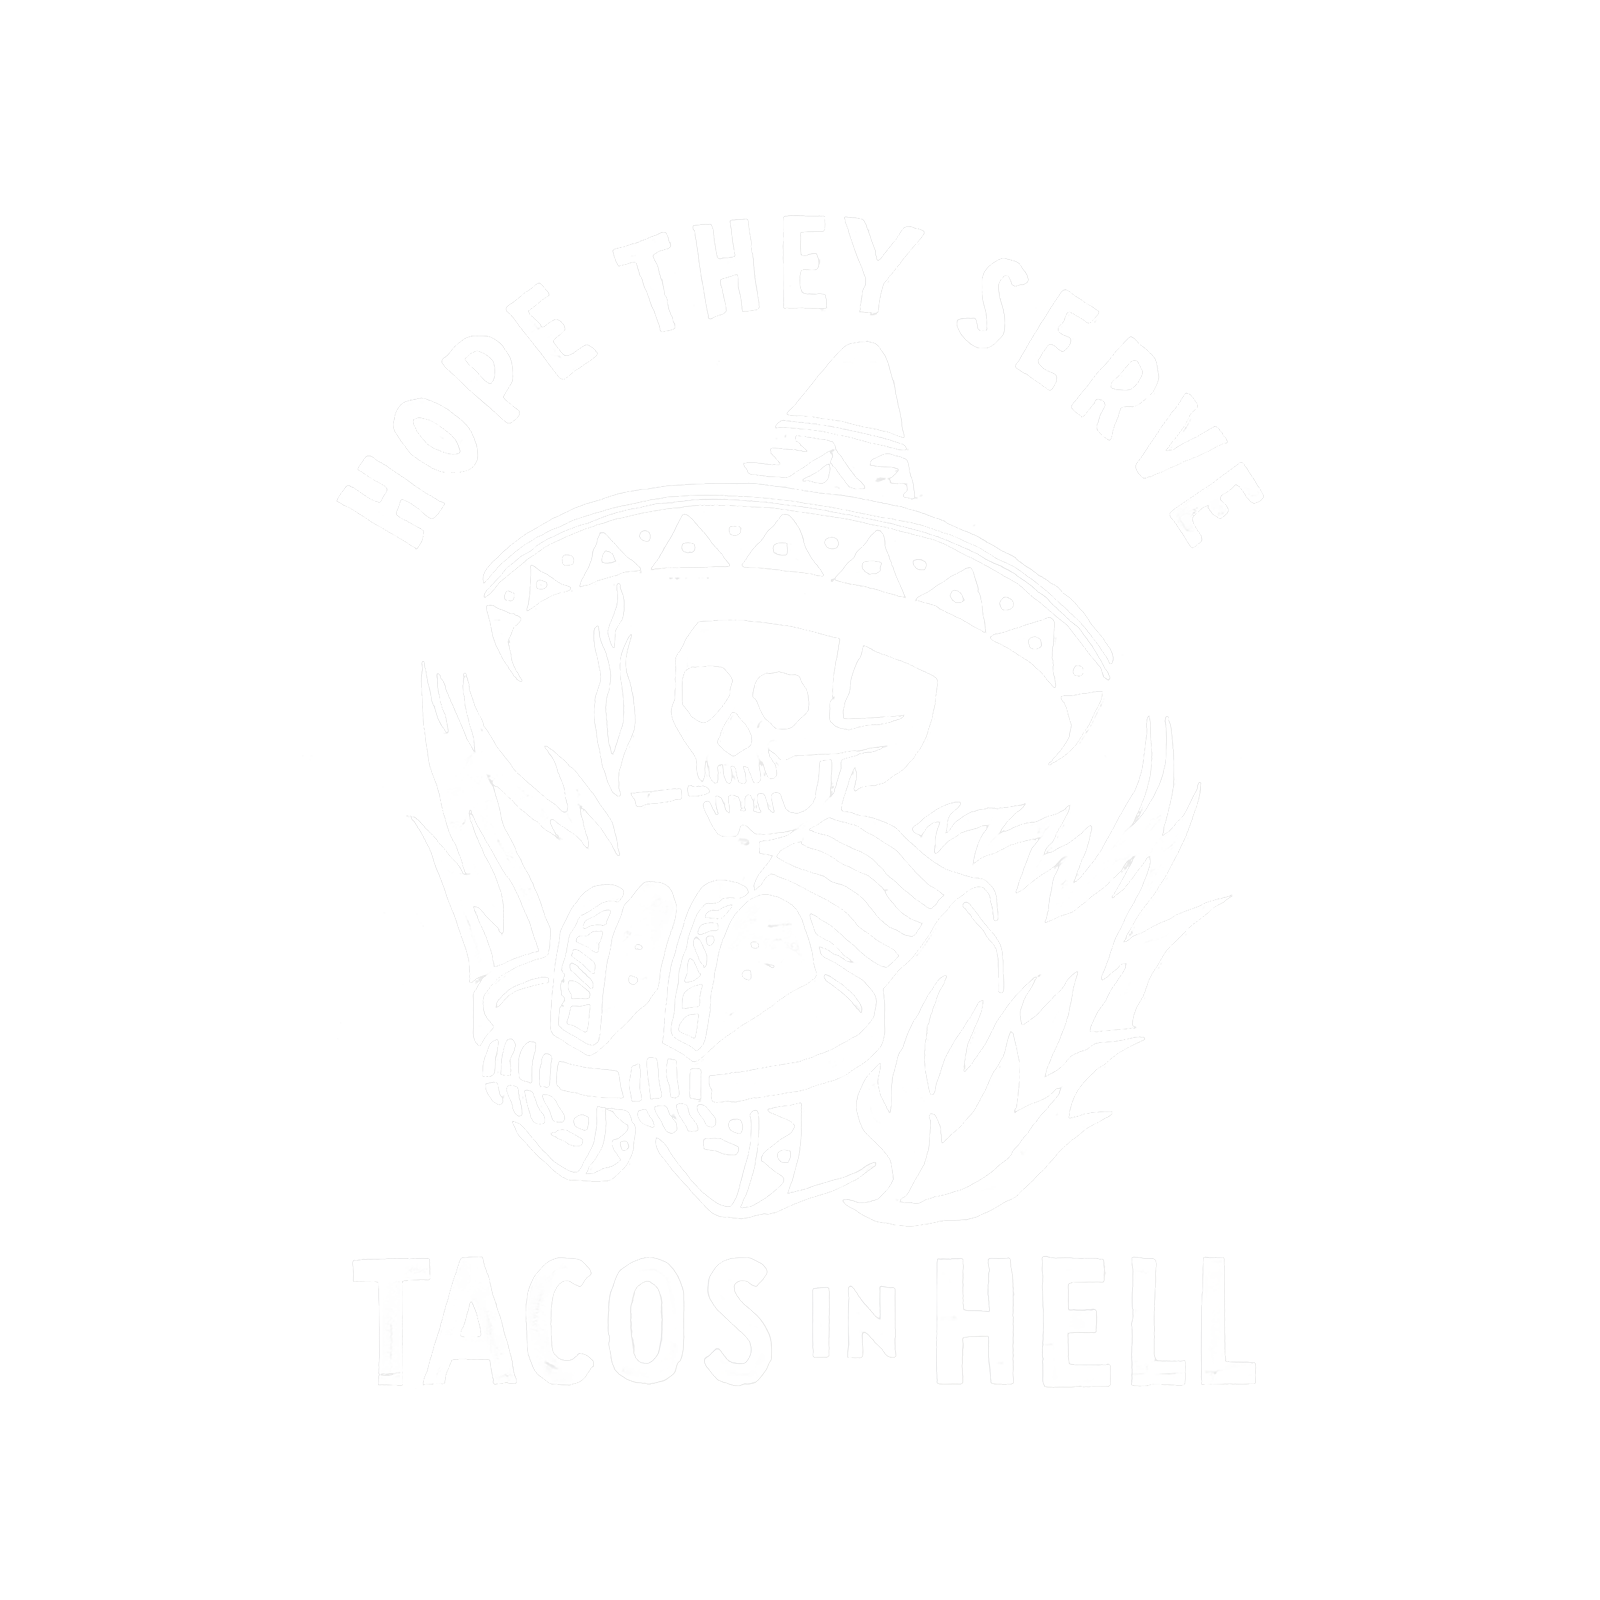 Cloeinc Hope They Serve Tacos In Hell Men Hoodie - chicyea